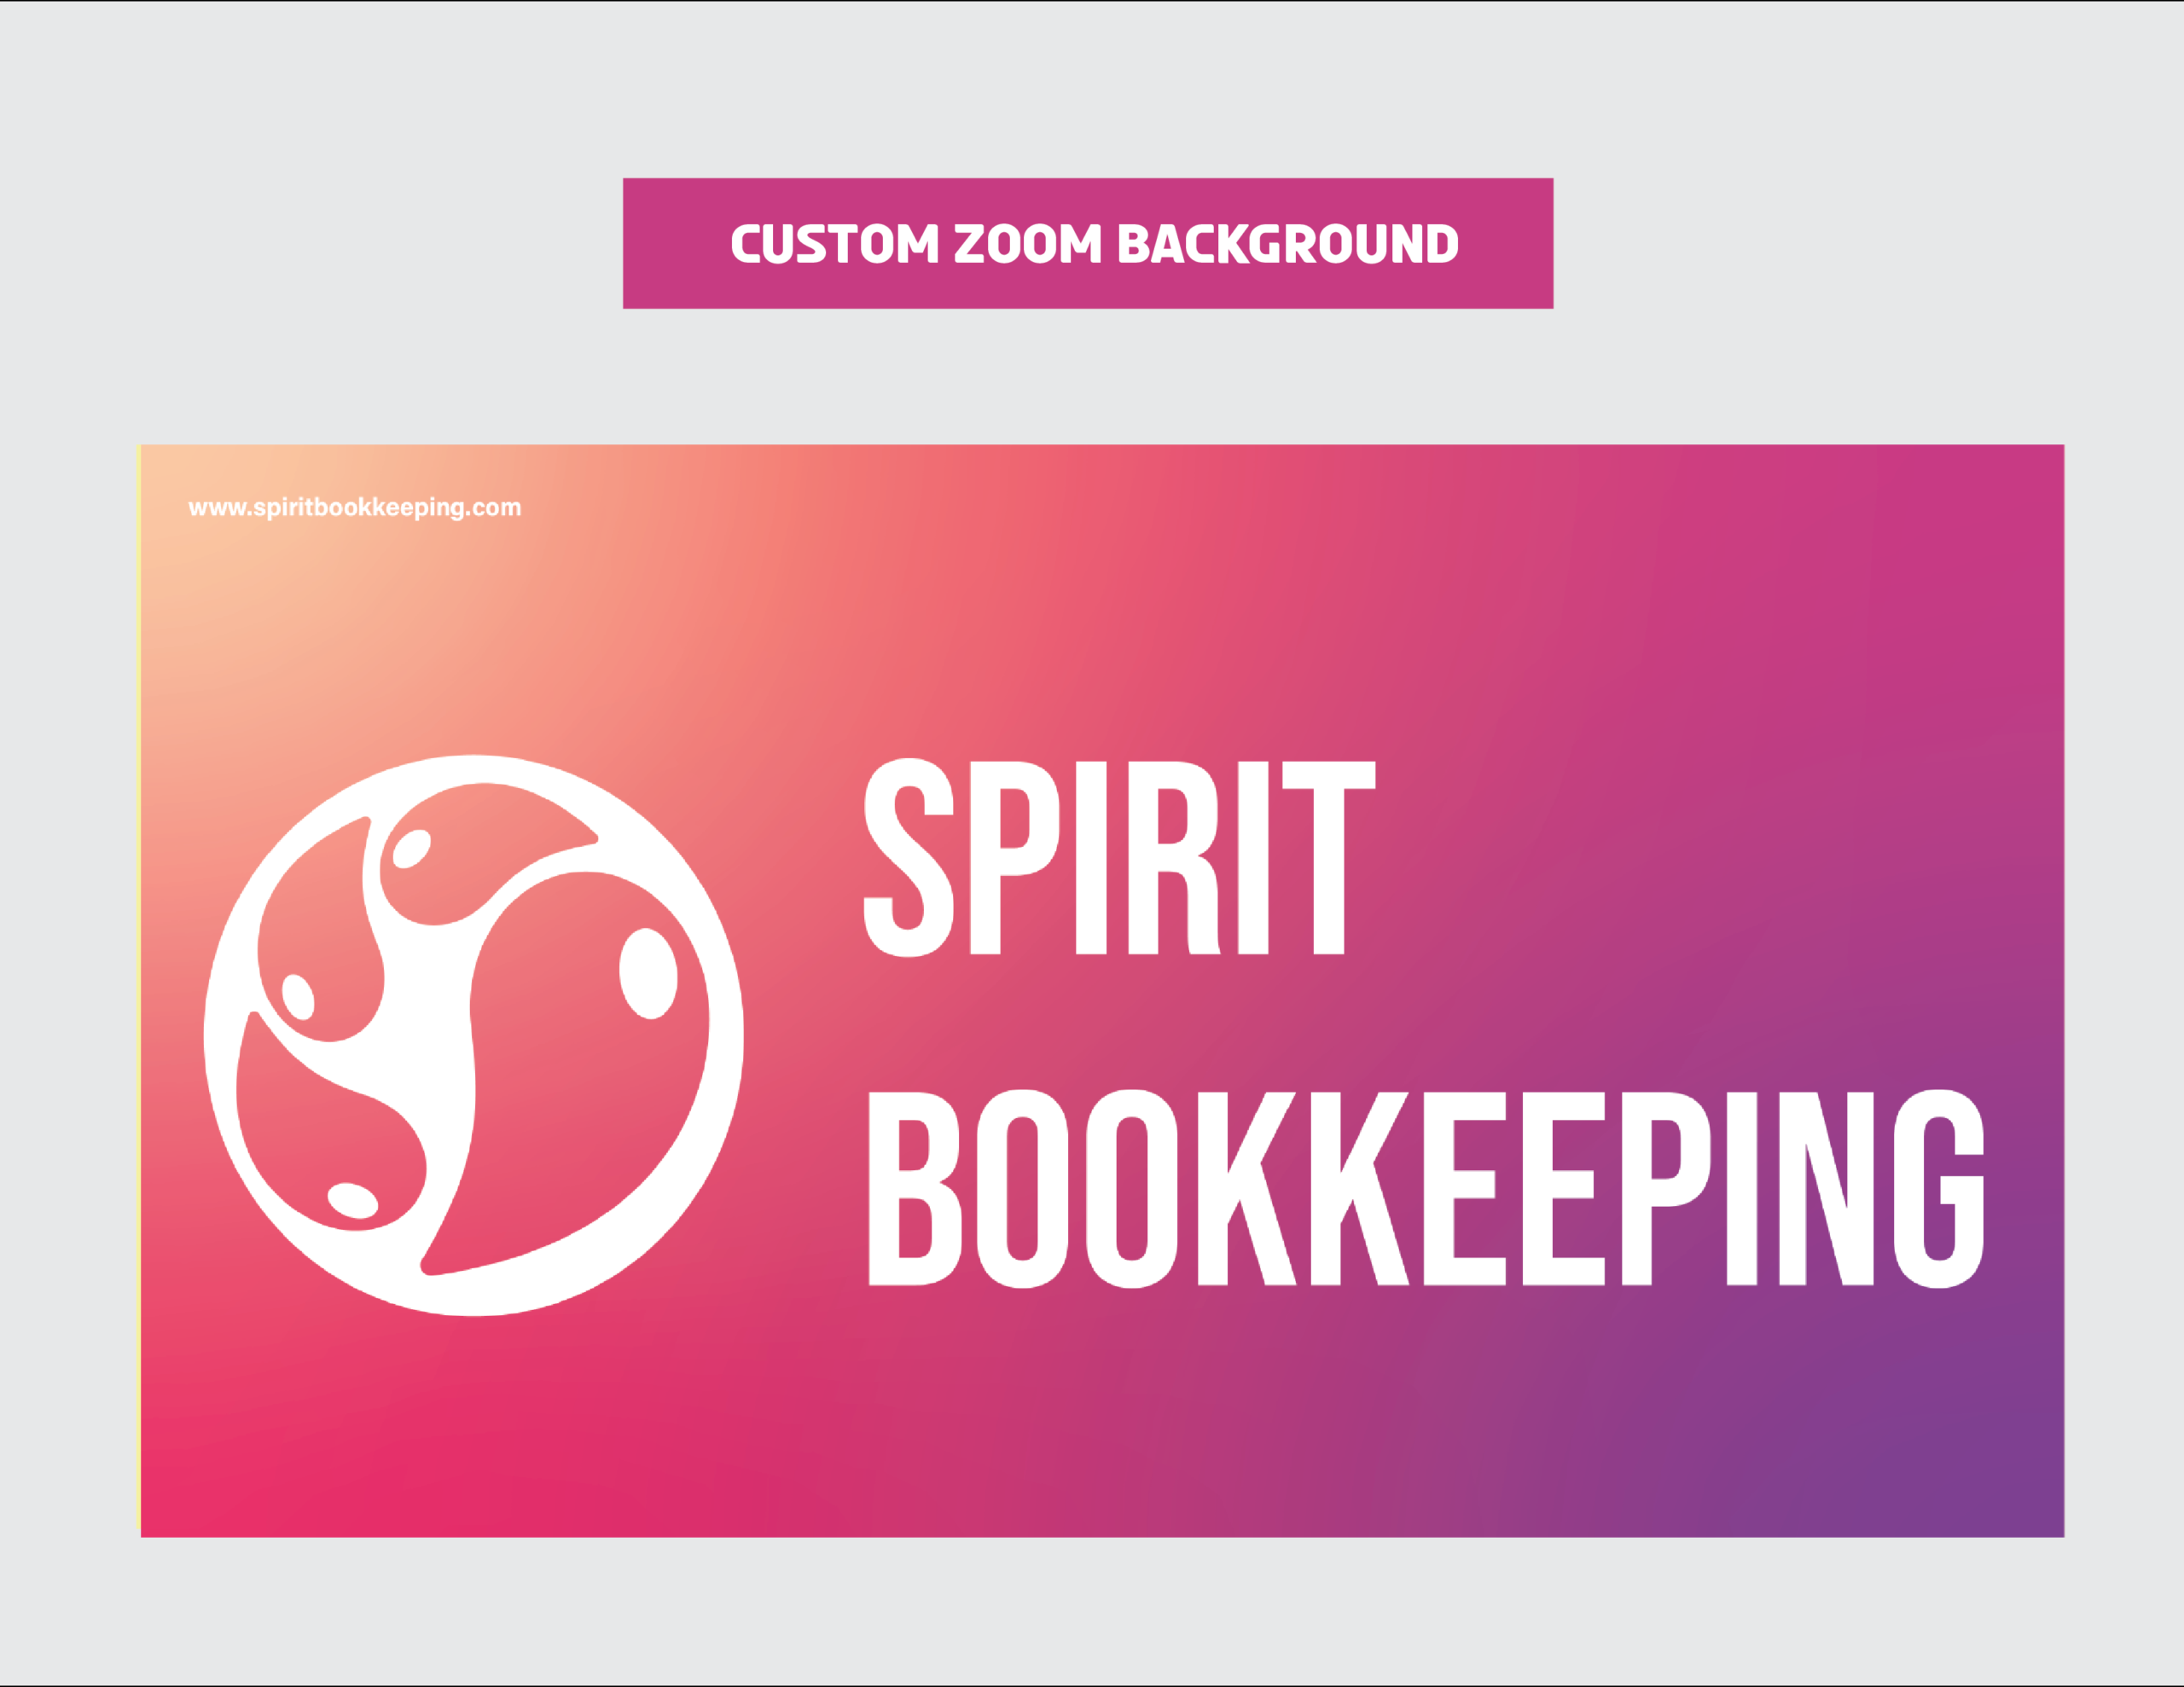 07_SpiritBookkeeping_Custom Zoom Background